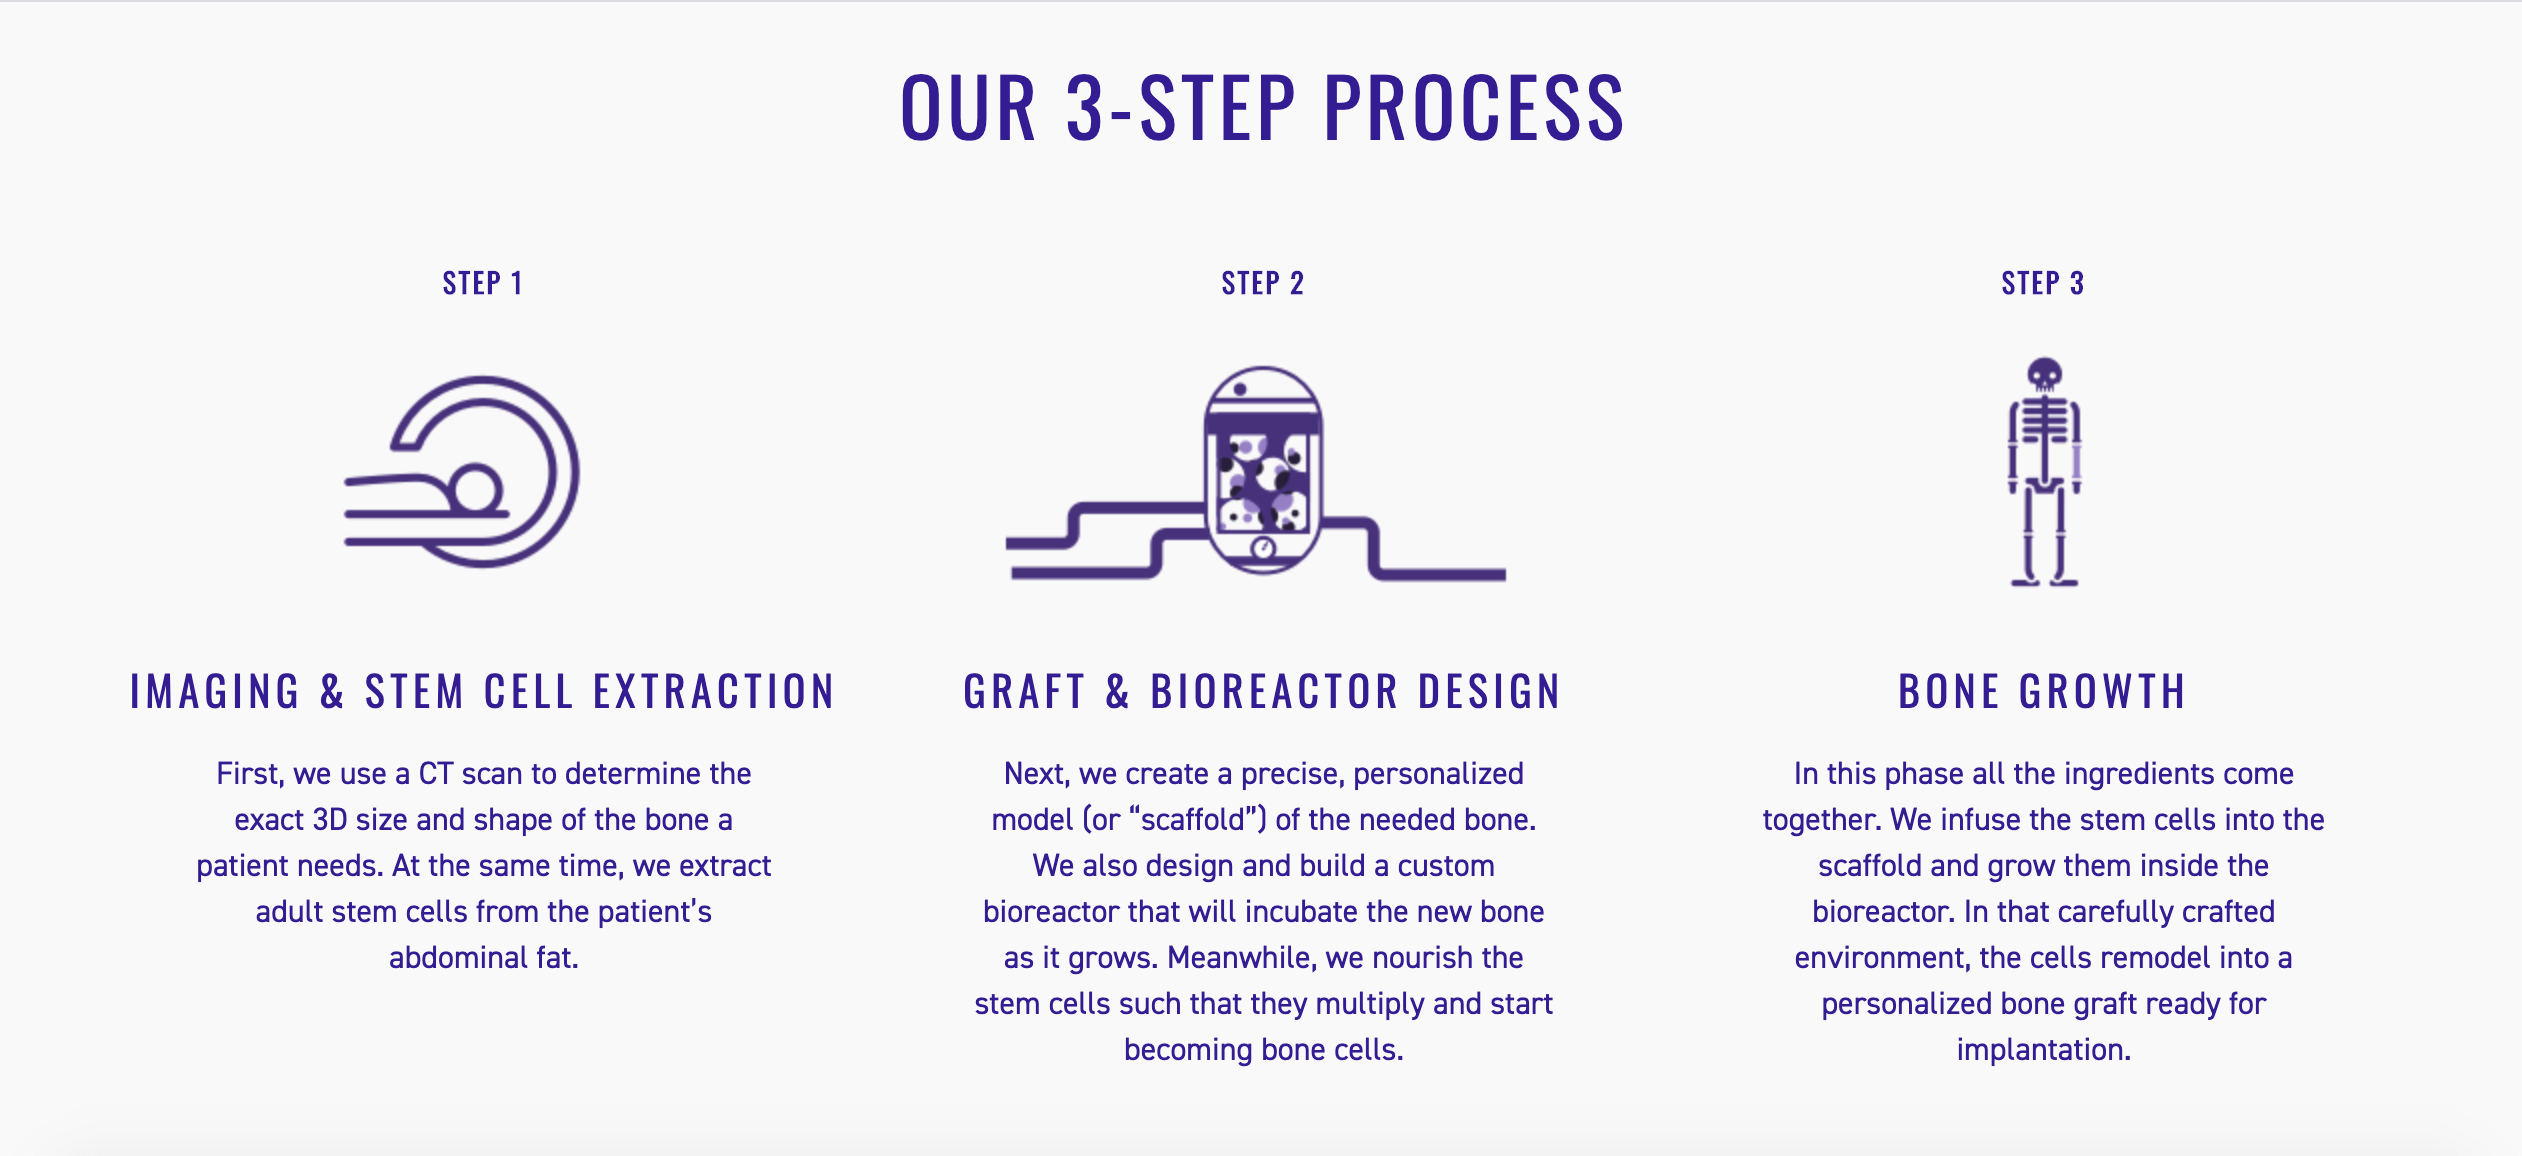 EpiBone's 3-Step Process